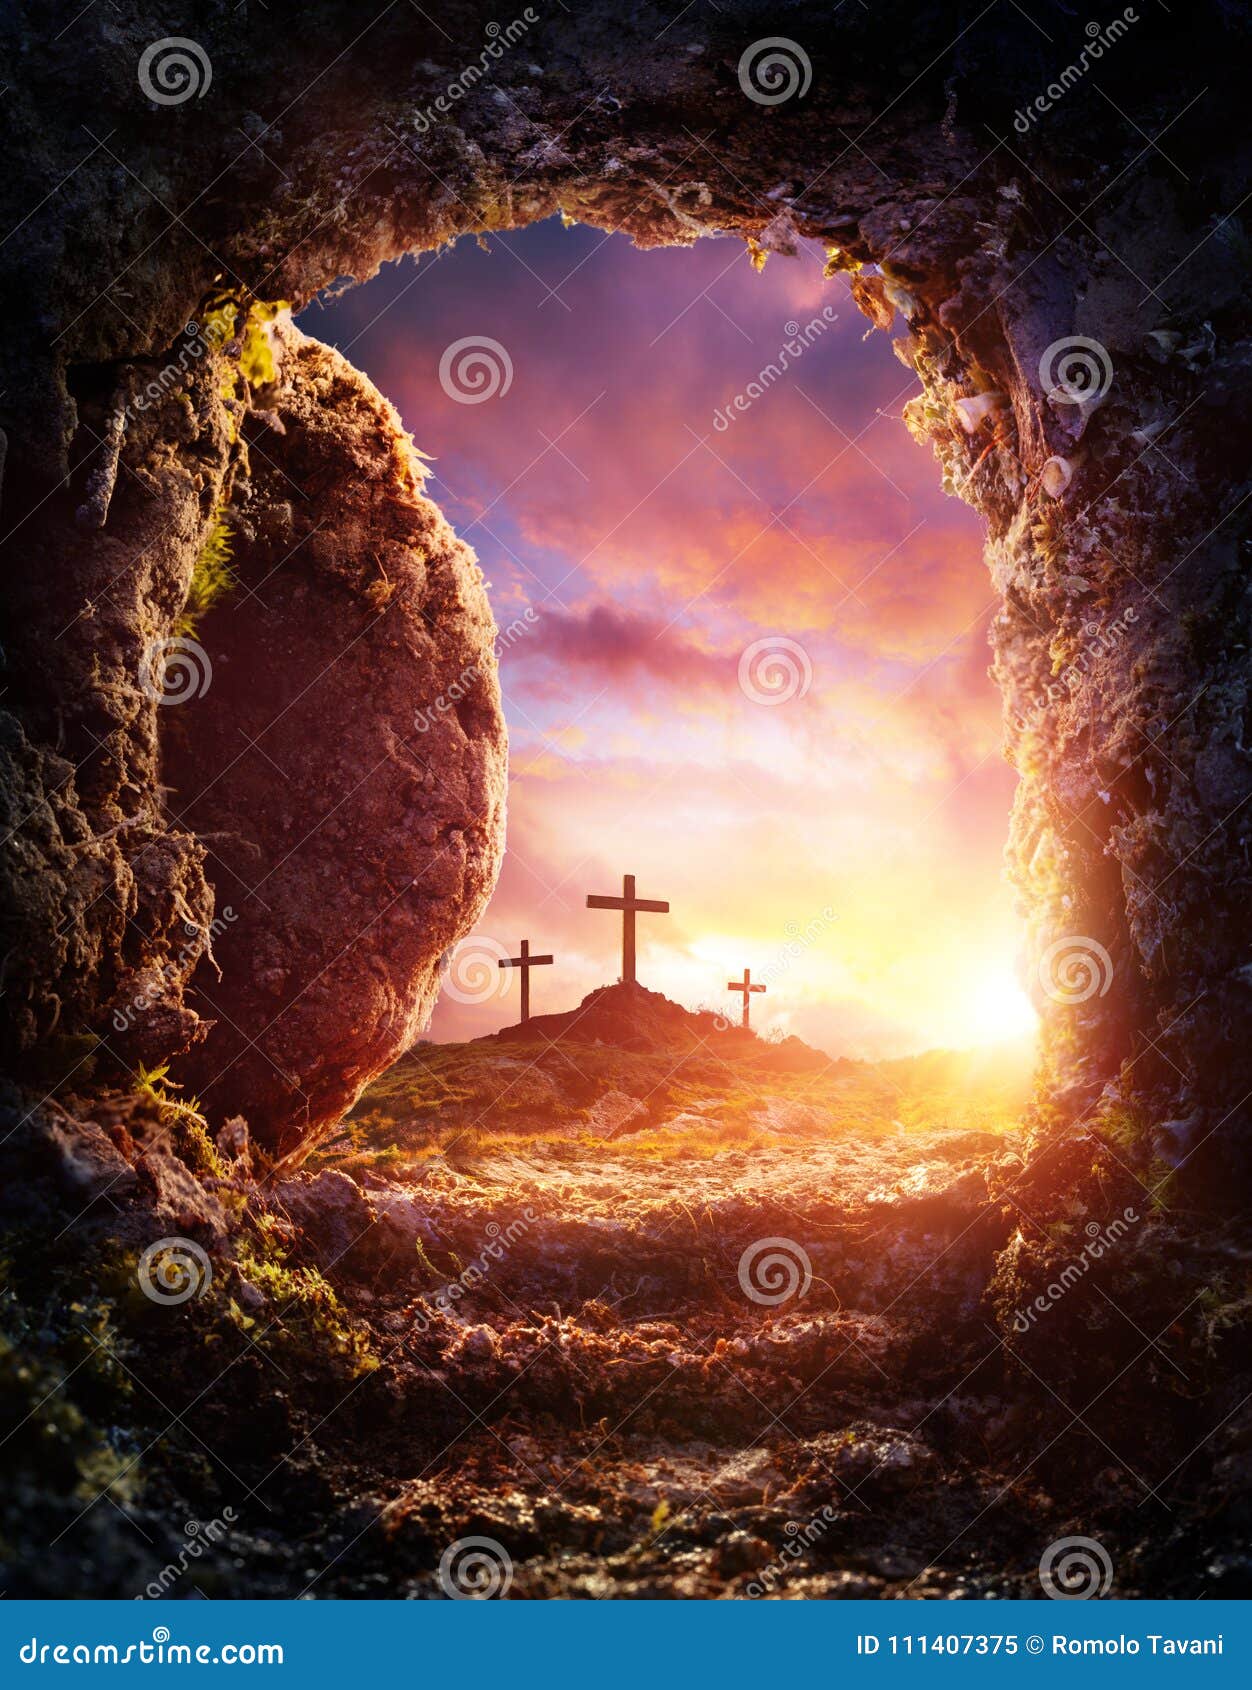 crucifixion and resurrection of jesus christ - empty tomb